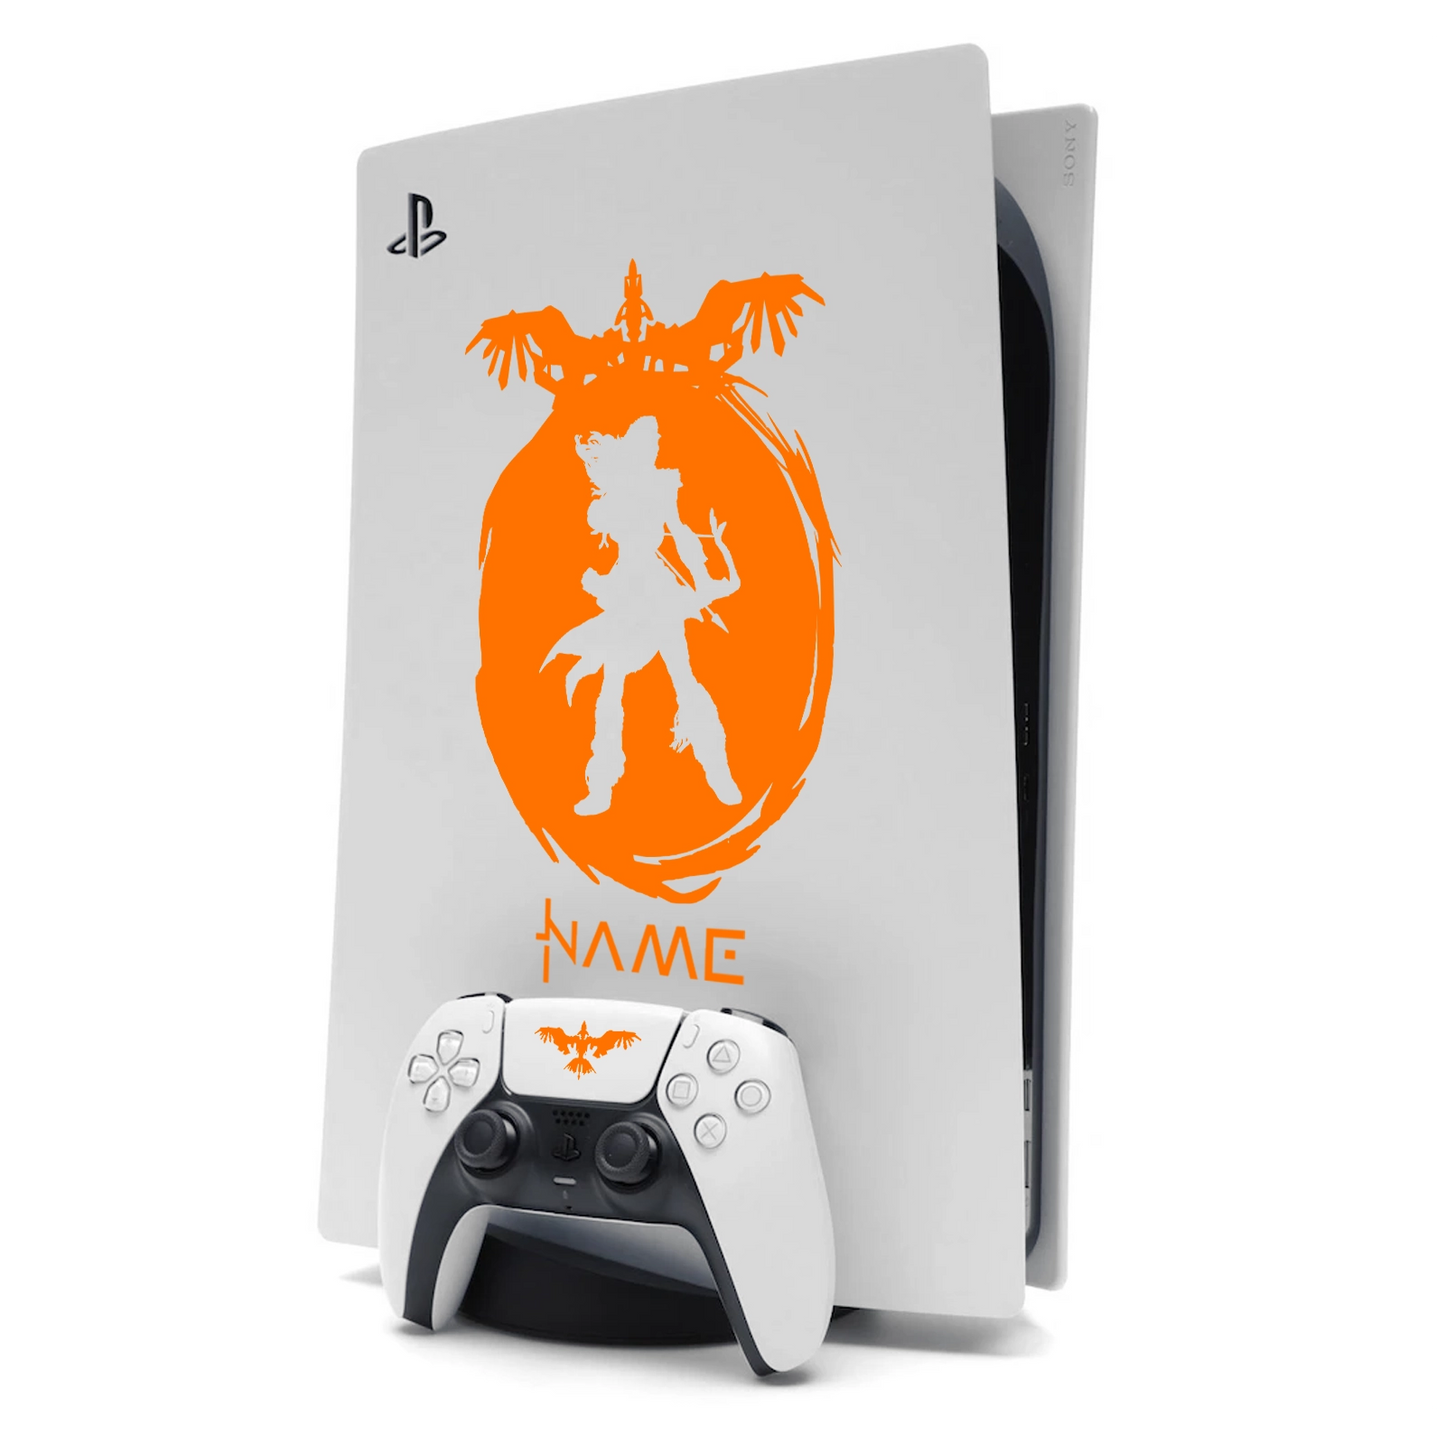 Horizon Aloy PS5 Sticker Skin for Playstation 5 in Orange